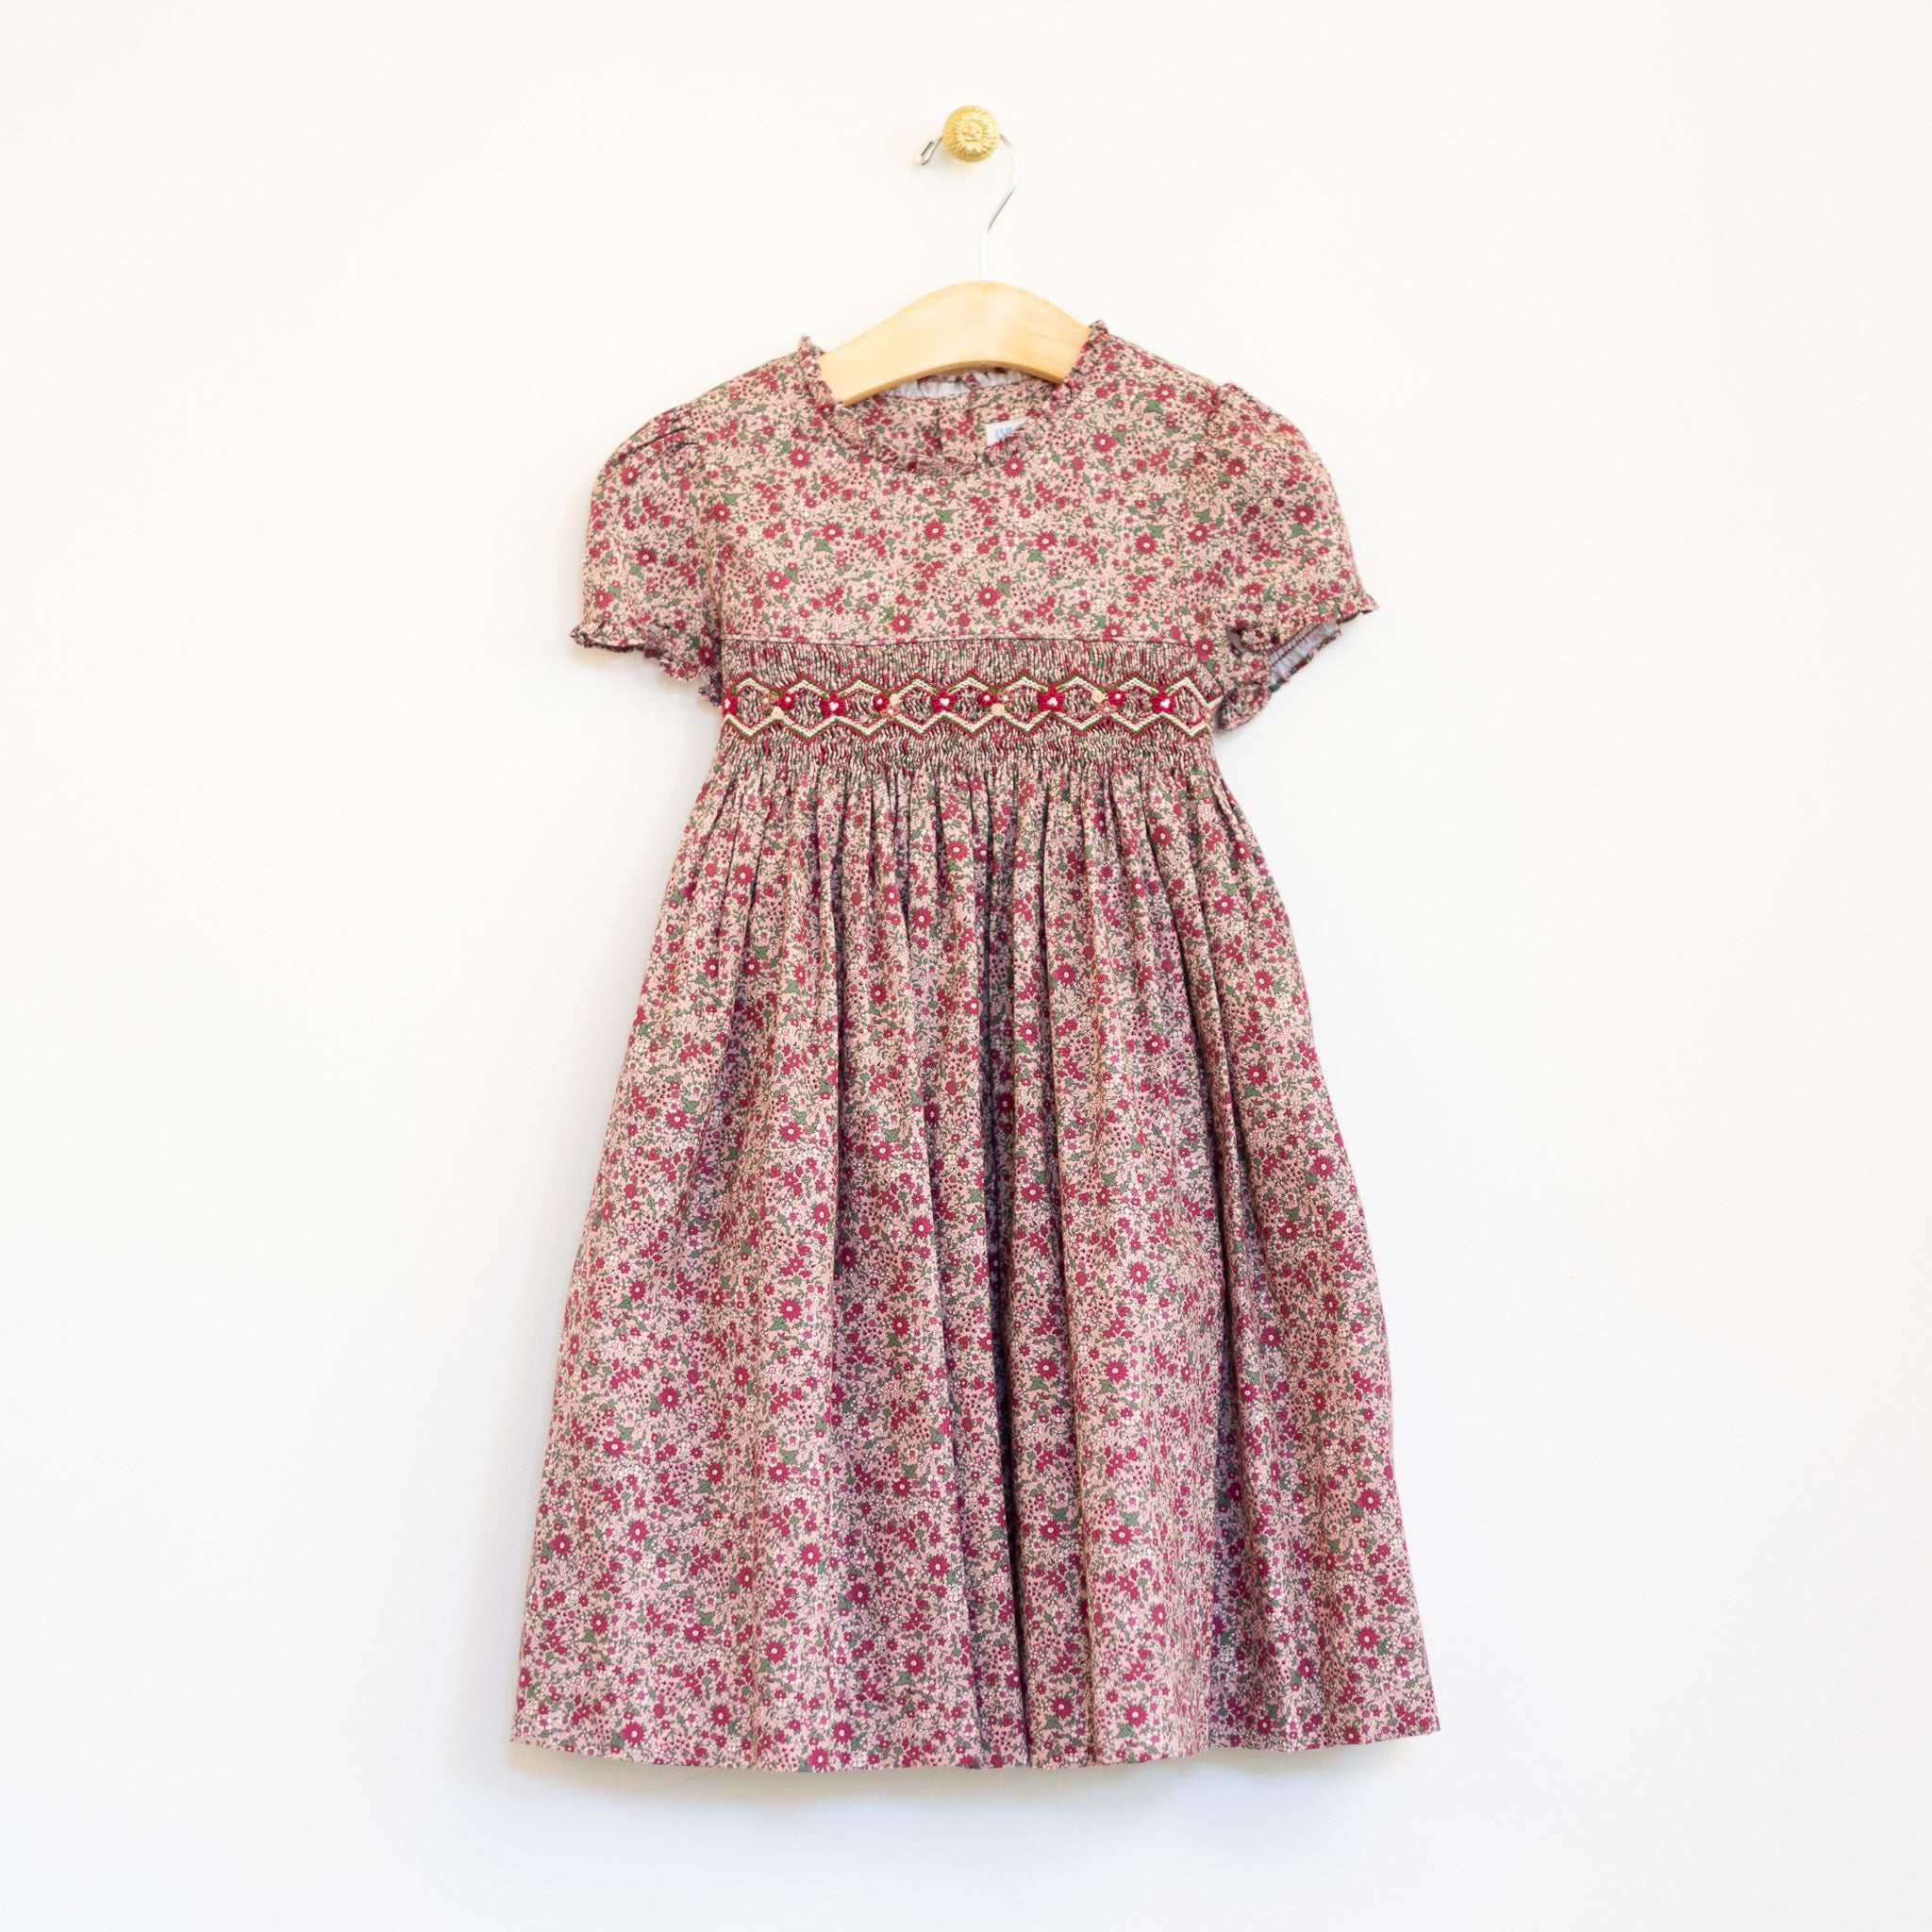 Cranberry Print Smocked Dress